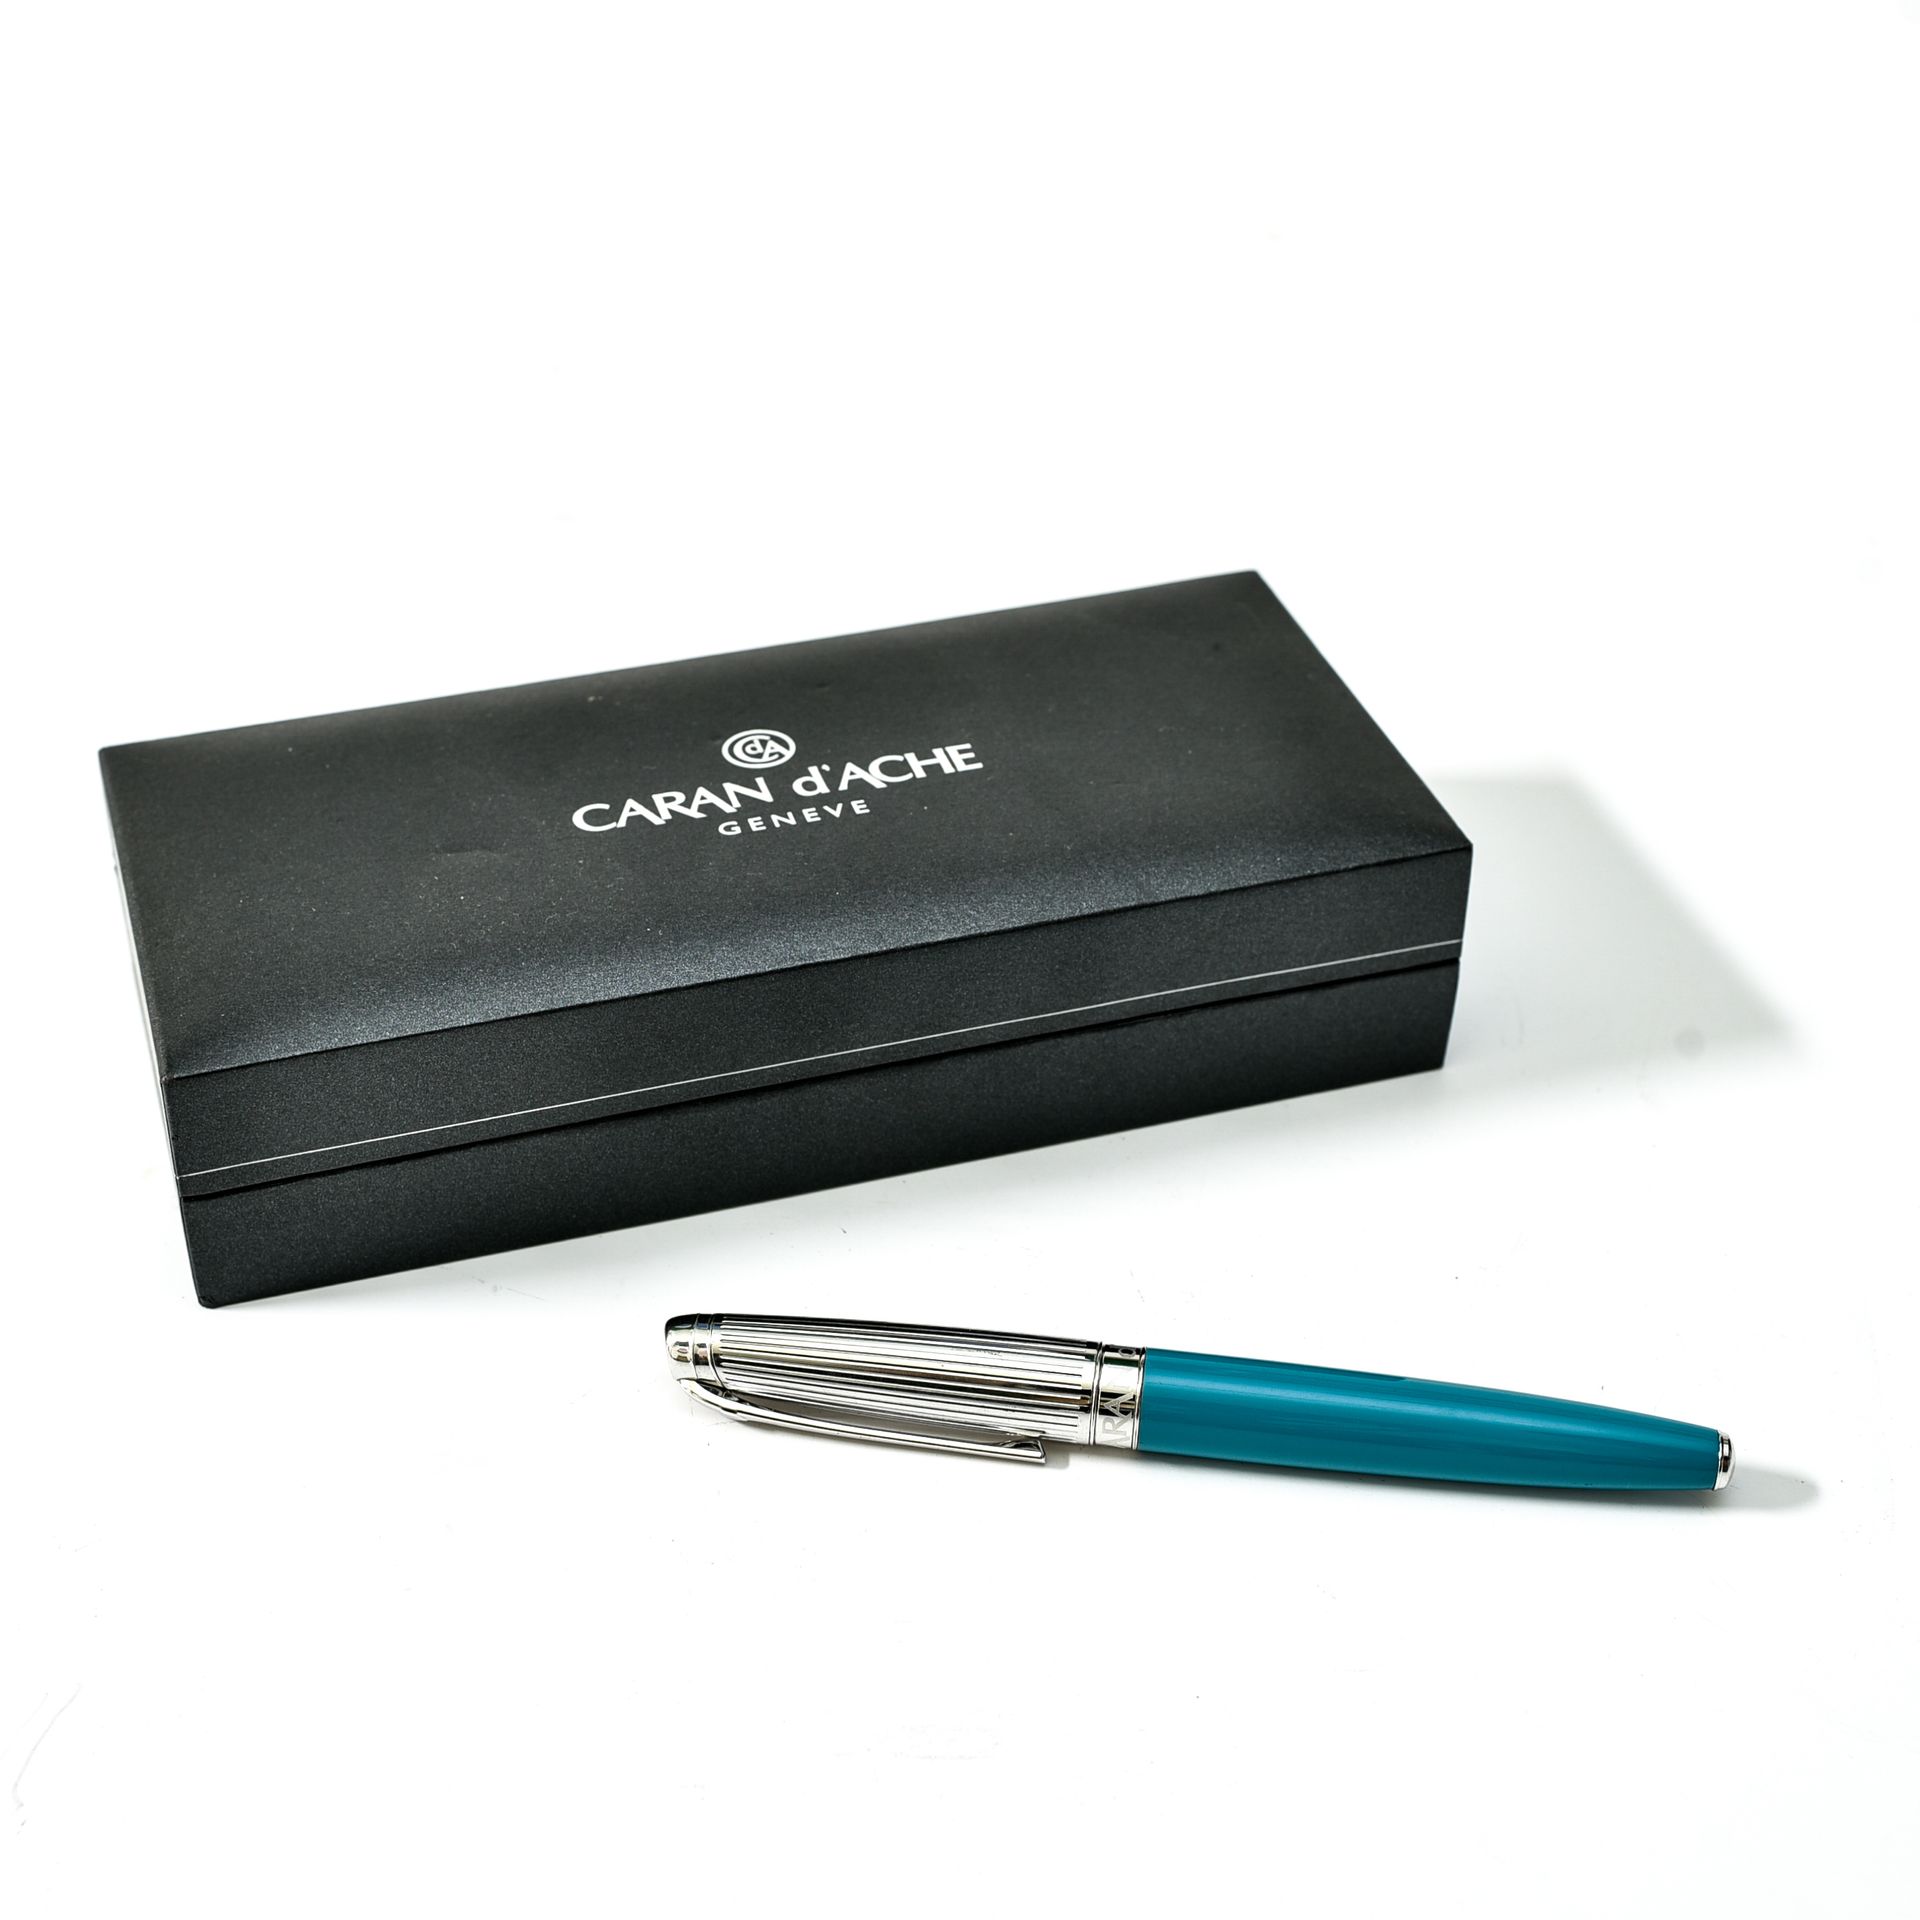 CARAN D'ACHE CARAN d'ACHE

Turquoise Léman ballpoint pen



in its original case